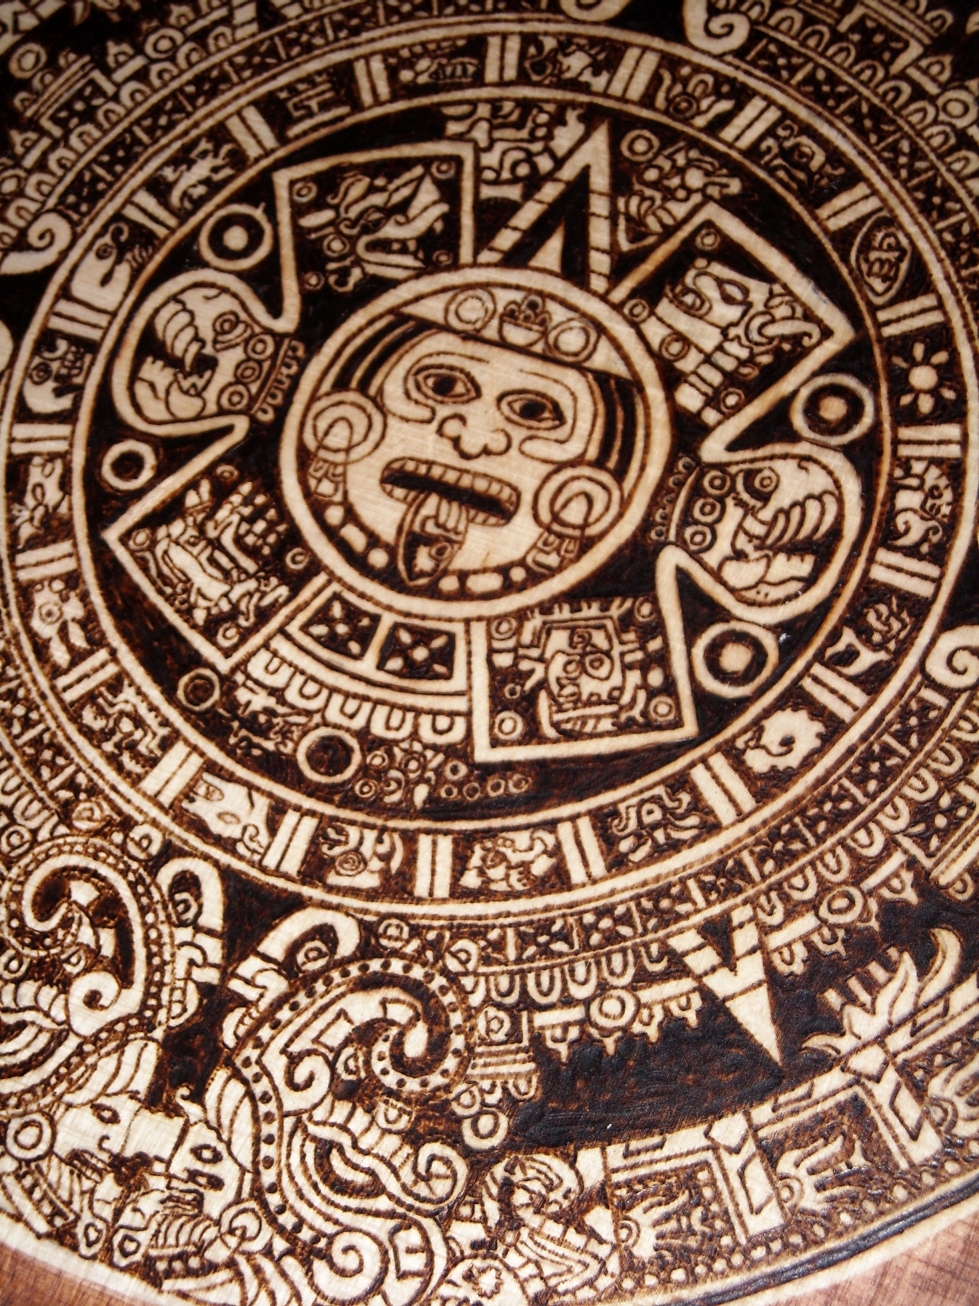 Burned in wood Mayan calendar 2 by kaneda8585 on DeviantArt